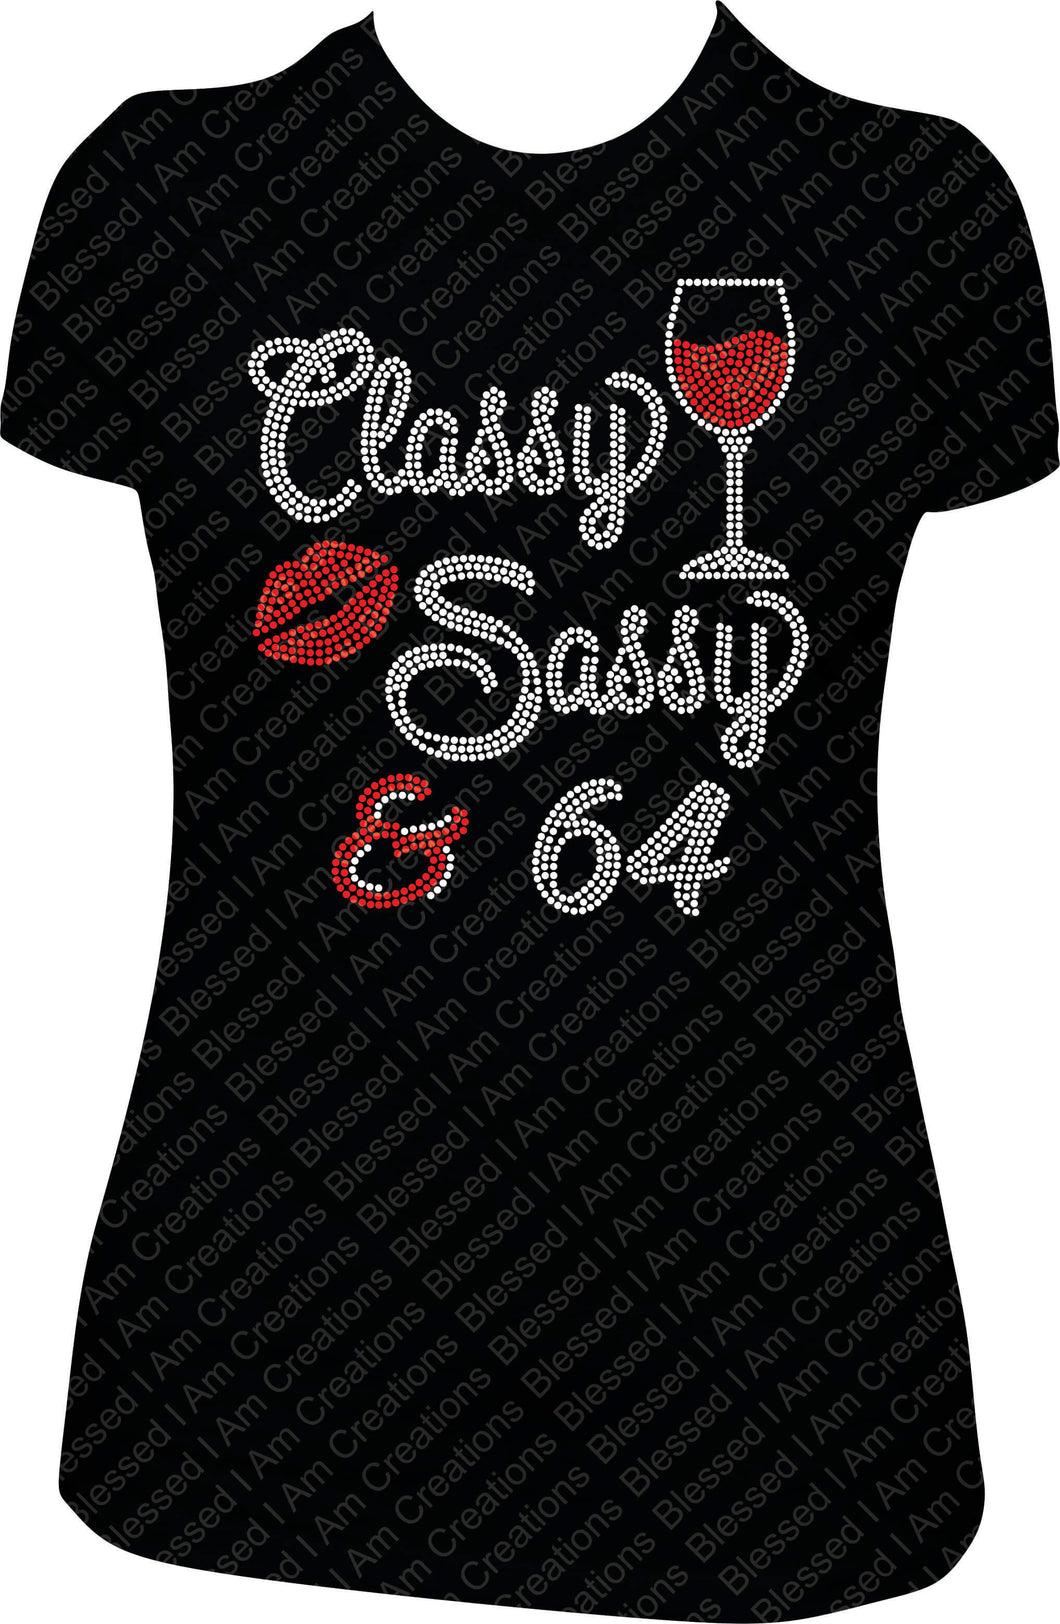 Classy Sassy and 64 rhinestone shirt, 64th rhinestone shirt, 64 bling shirt, 64th birthday shirt, 